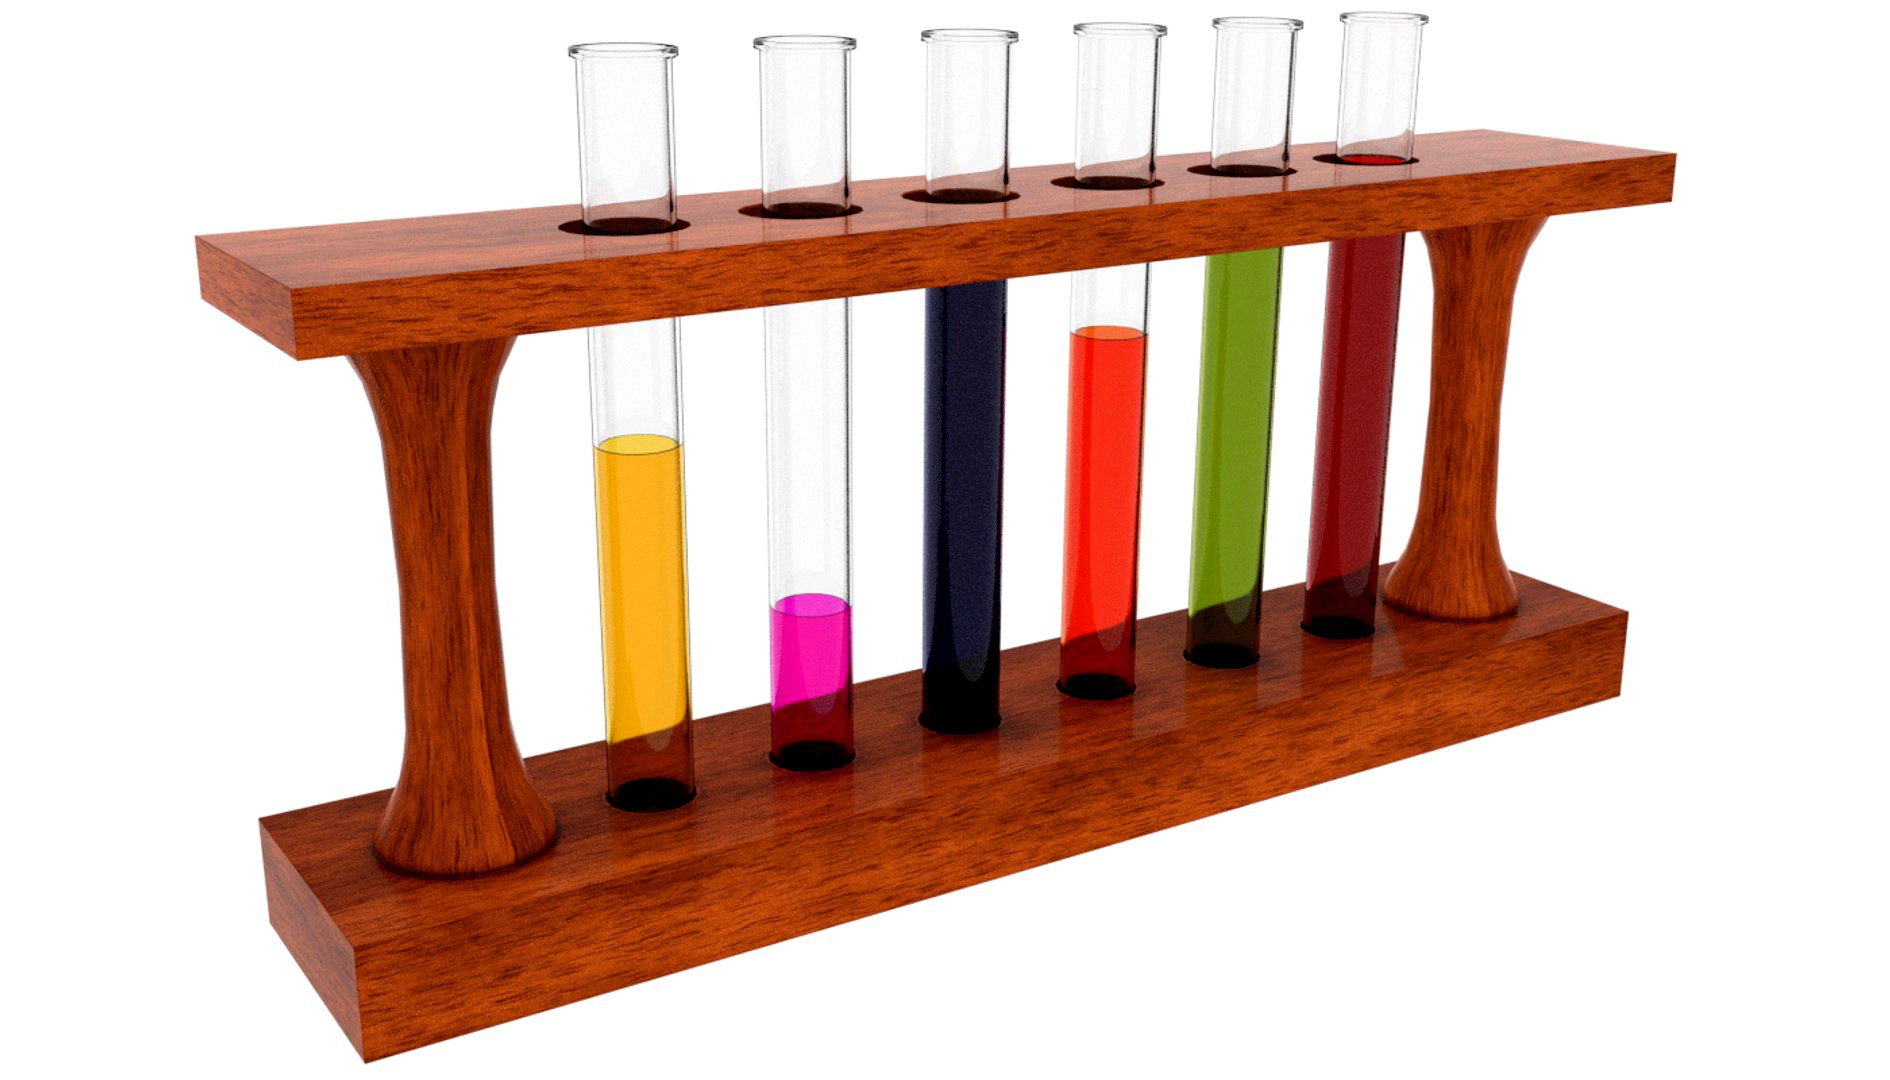 Set of laboratory test tubes